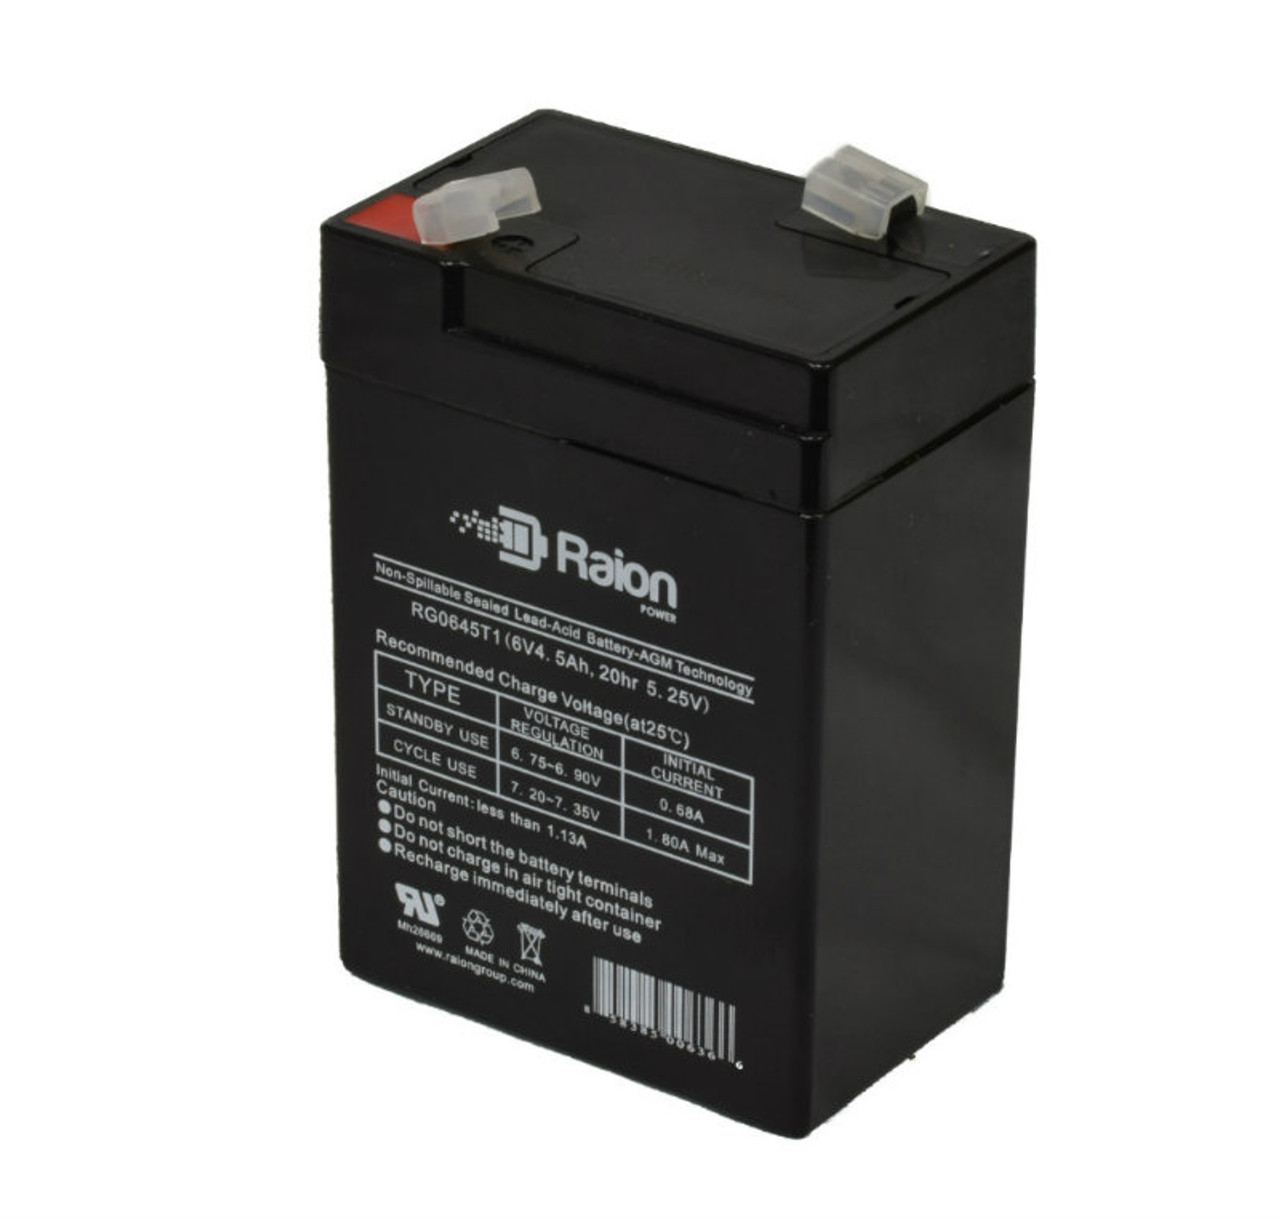 Raion Power RG0645T1 6V 4.5Ah Replacement Battery Cartridge for Abbott Laboratories 1050 Controller